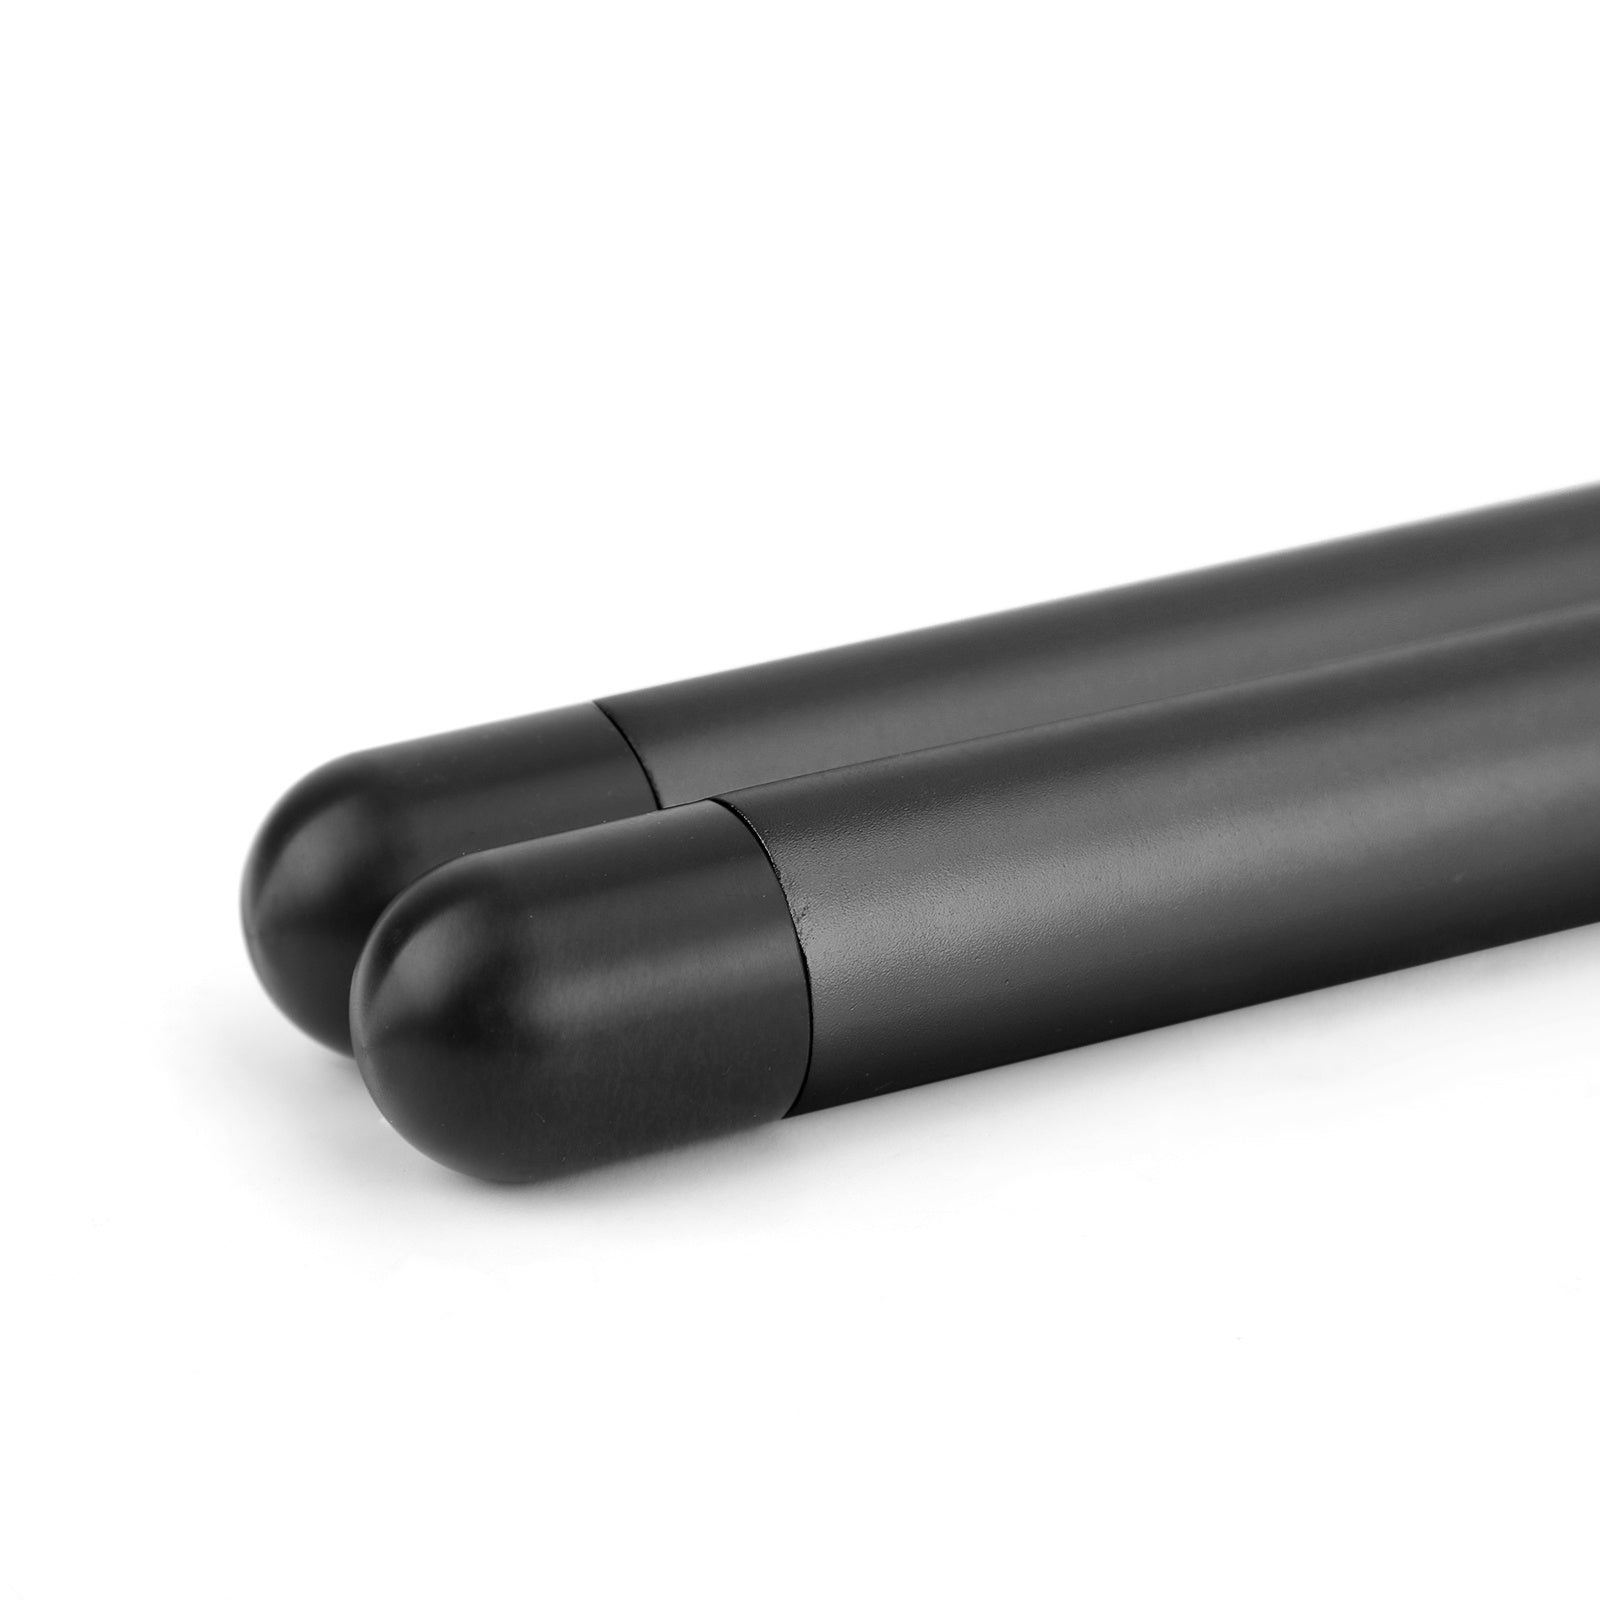 Kit manubrio forcella tubo forcella universale regolabile rotativo CNC Billet Clip 51mm Generico